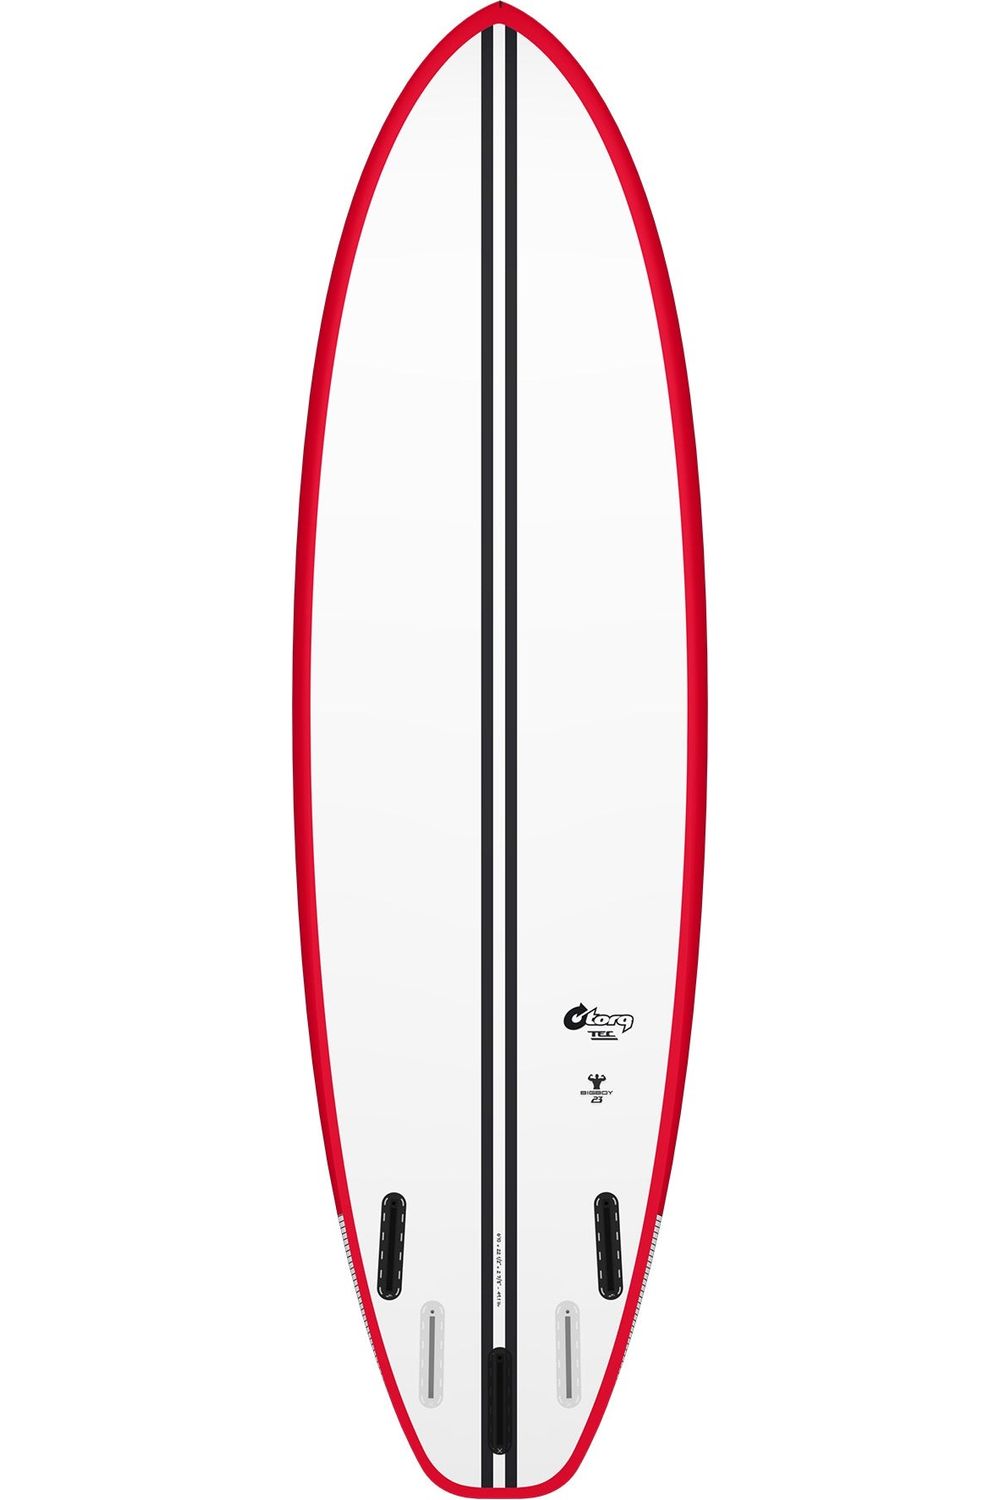 Torq TEC BigBoy23 Surfboard in Red/White